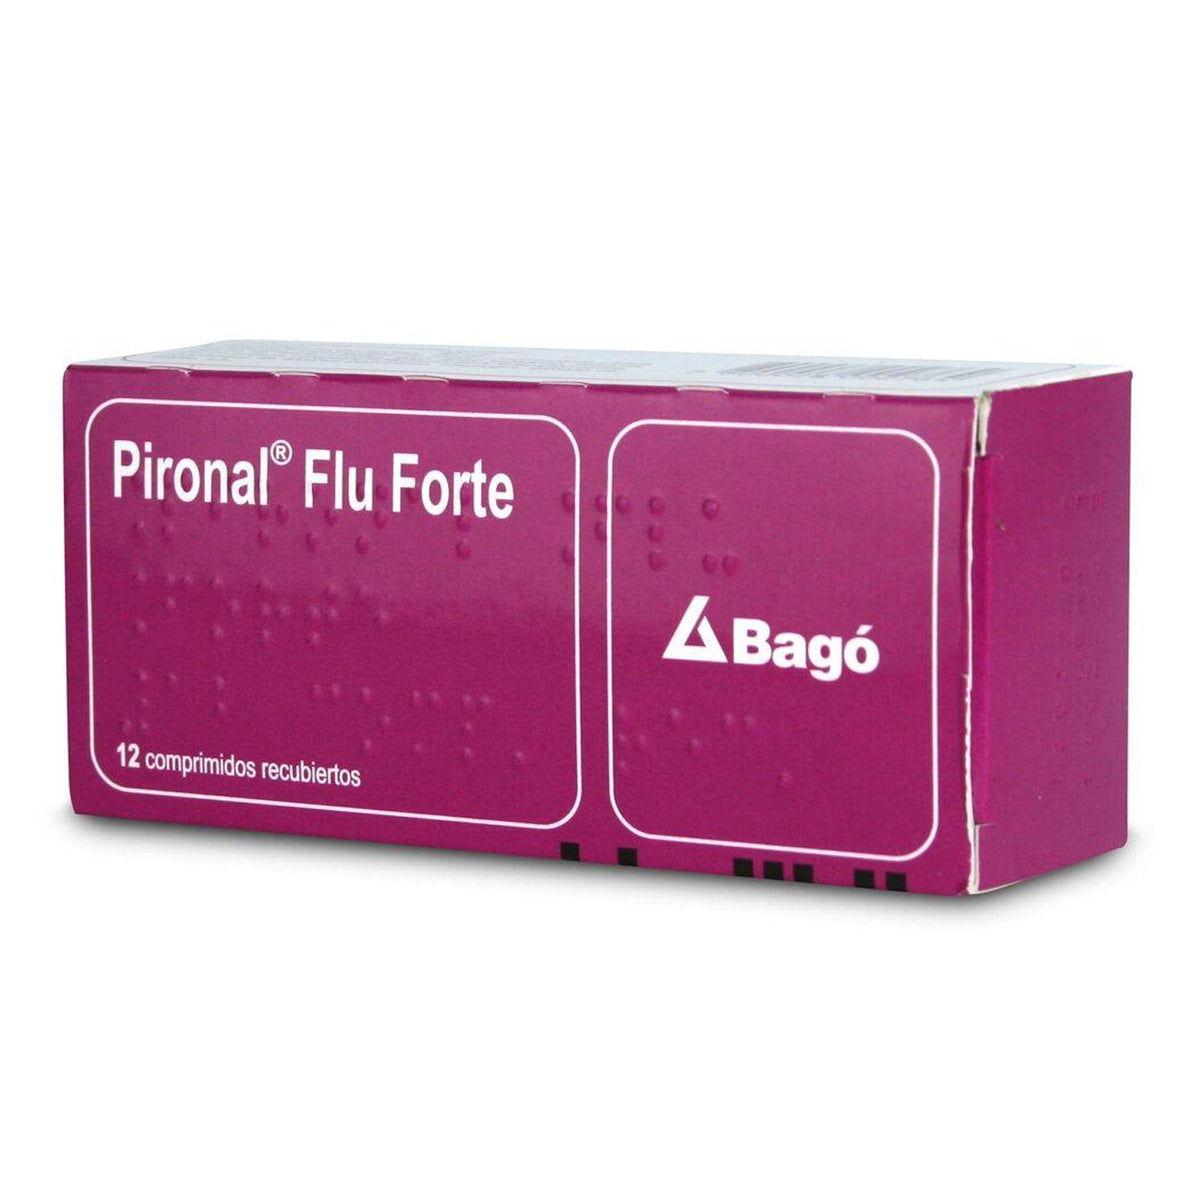 Pironal Flu Forte Comprimidos Recubiertos